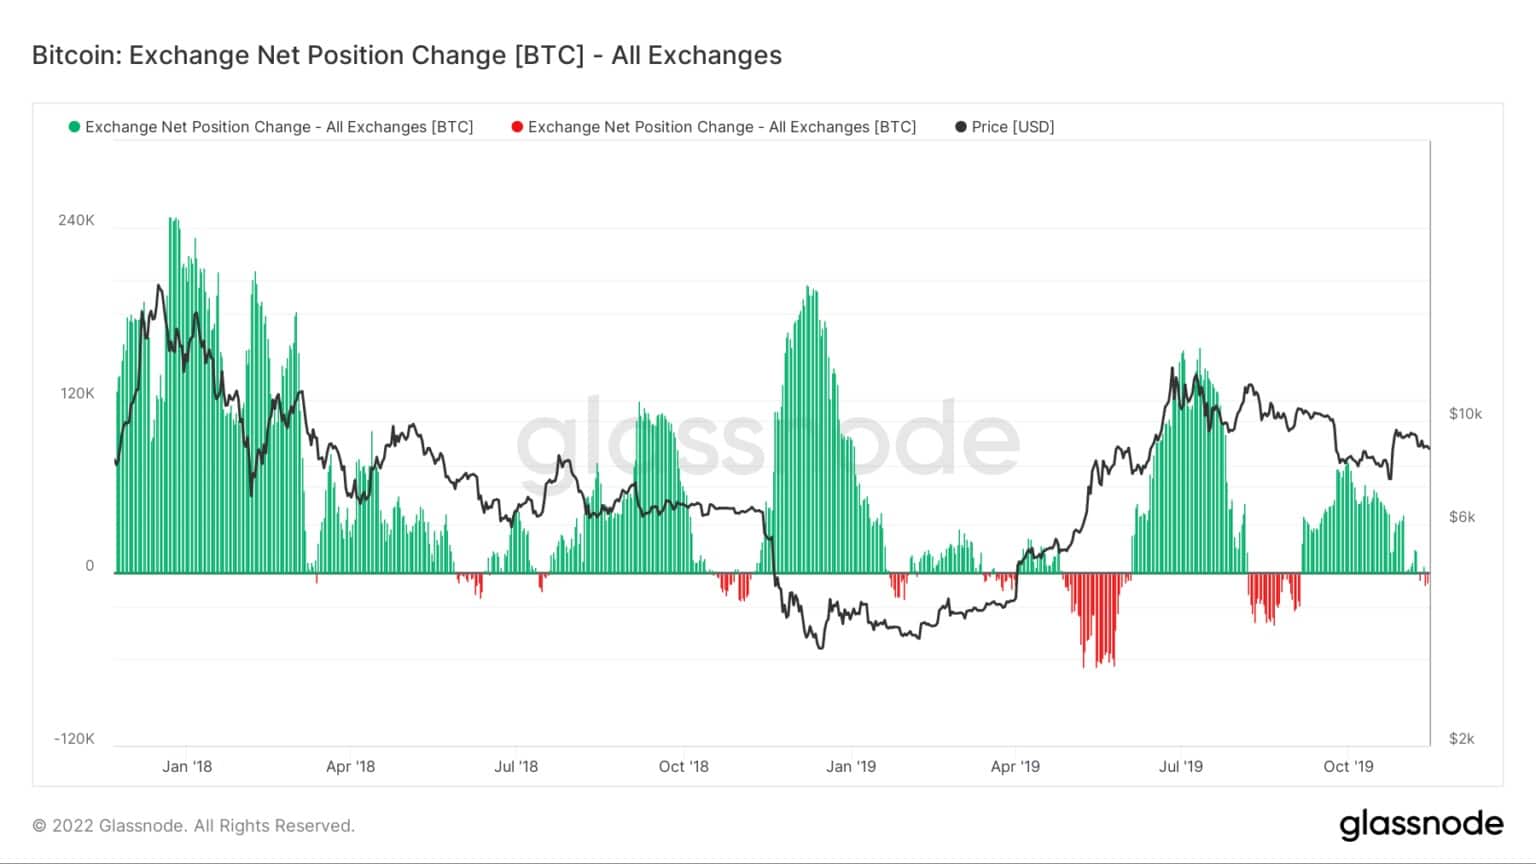 Bitcoin: Exchange Net Position Change - All Exchanges (Fonte: Glassnode)